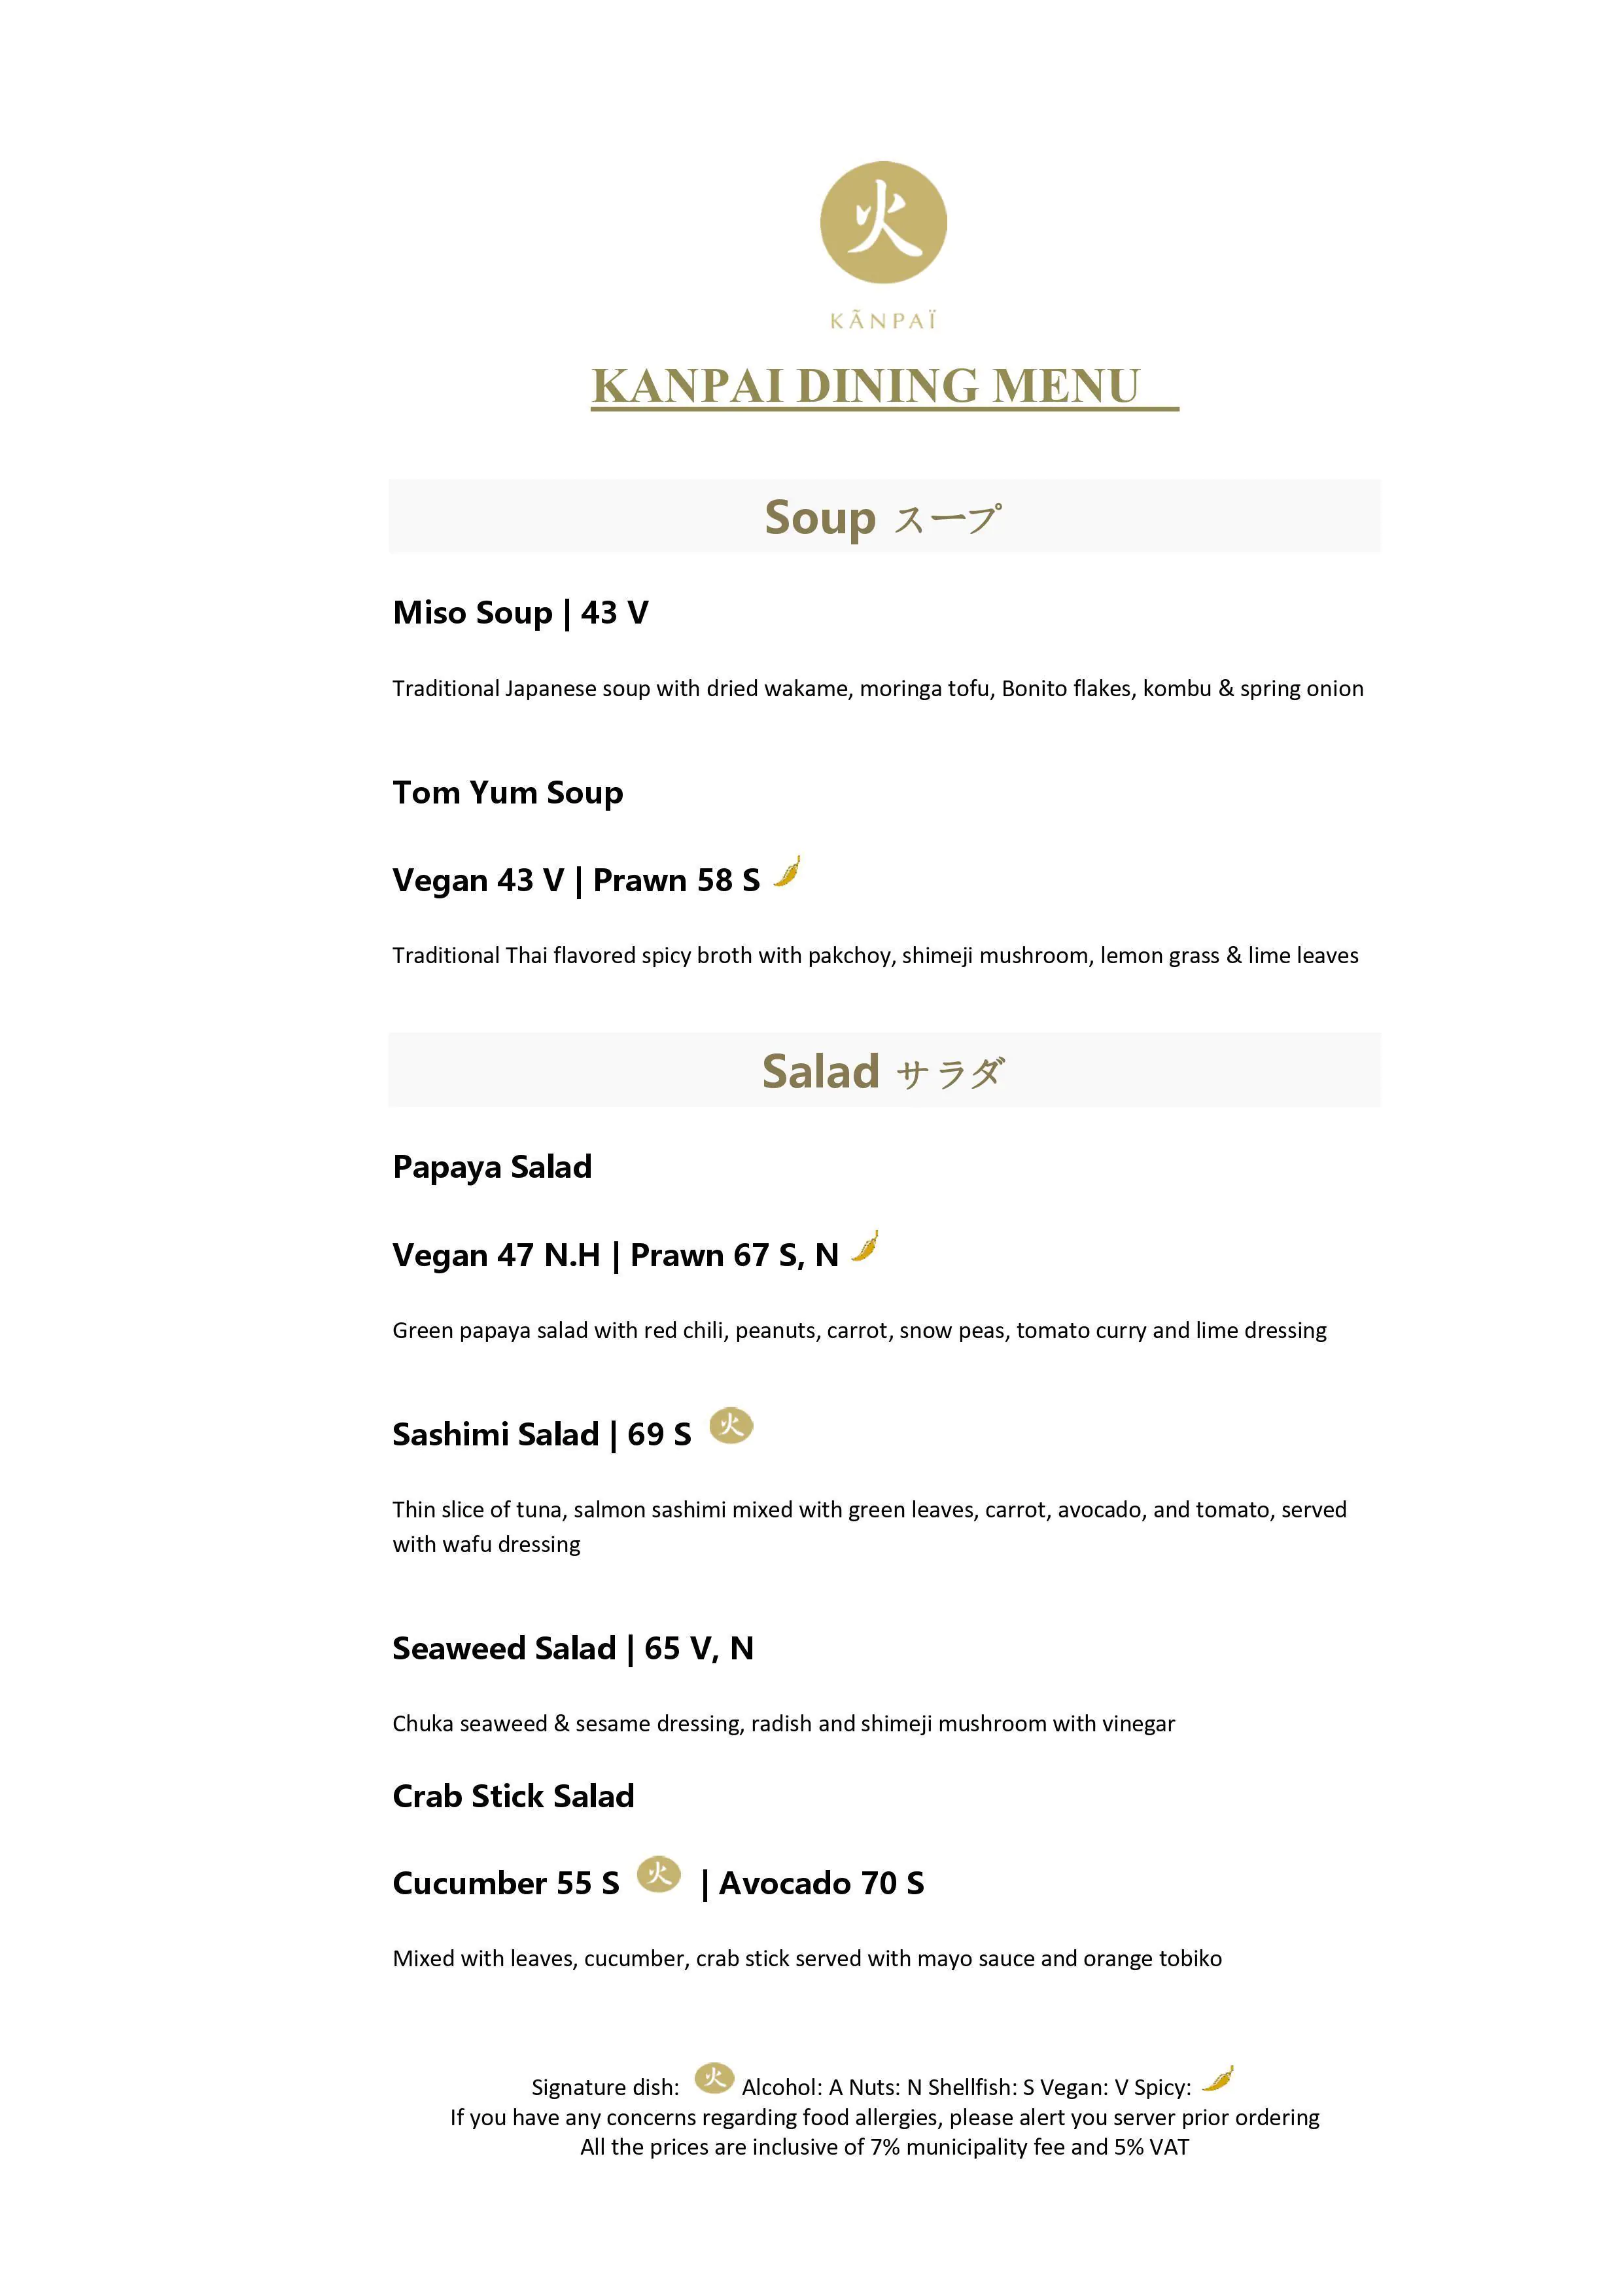 Best restaurant menu near Jumeirah Beach Centre Jumeirah 1 Dubai